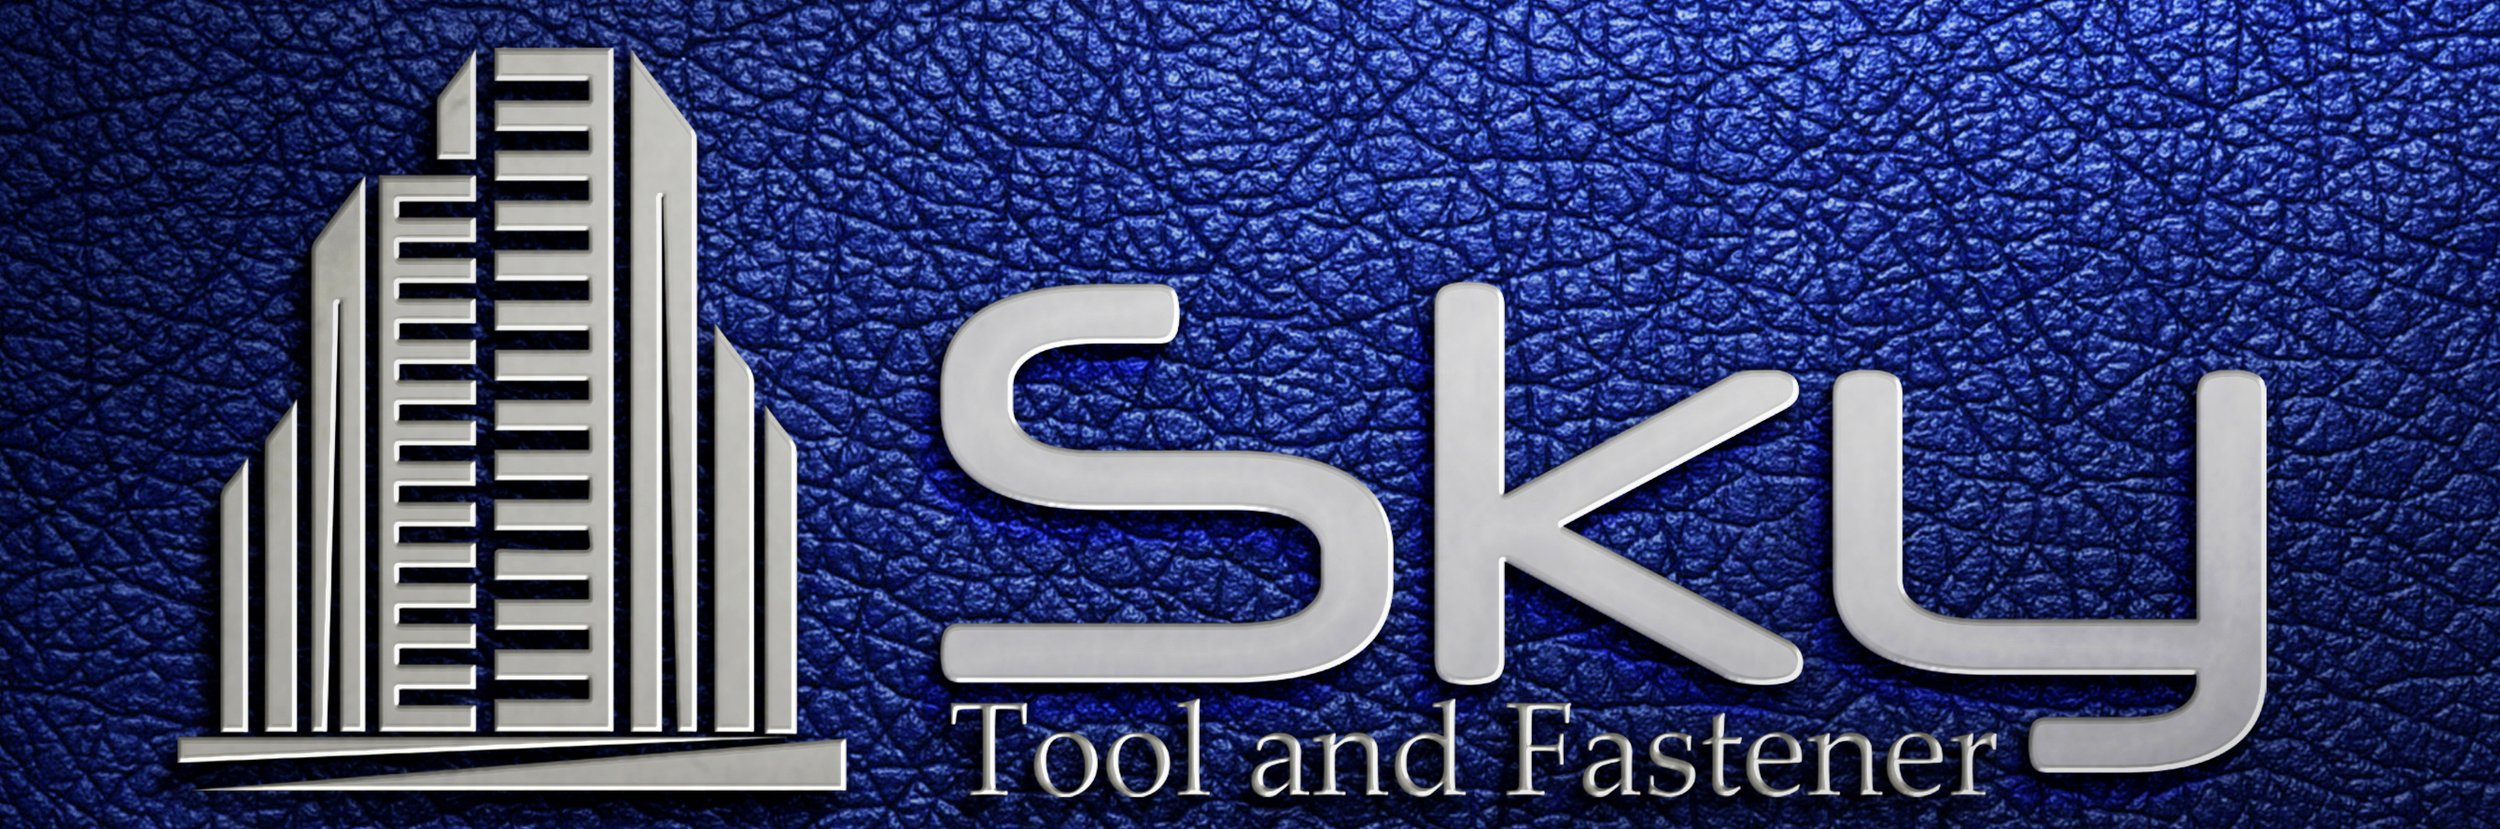 SKY logo metalic blue back with  message.jpg